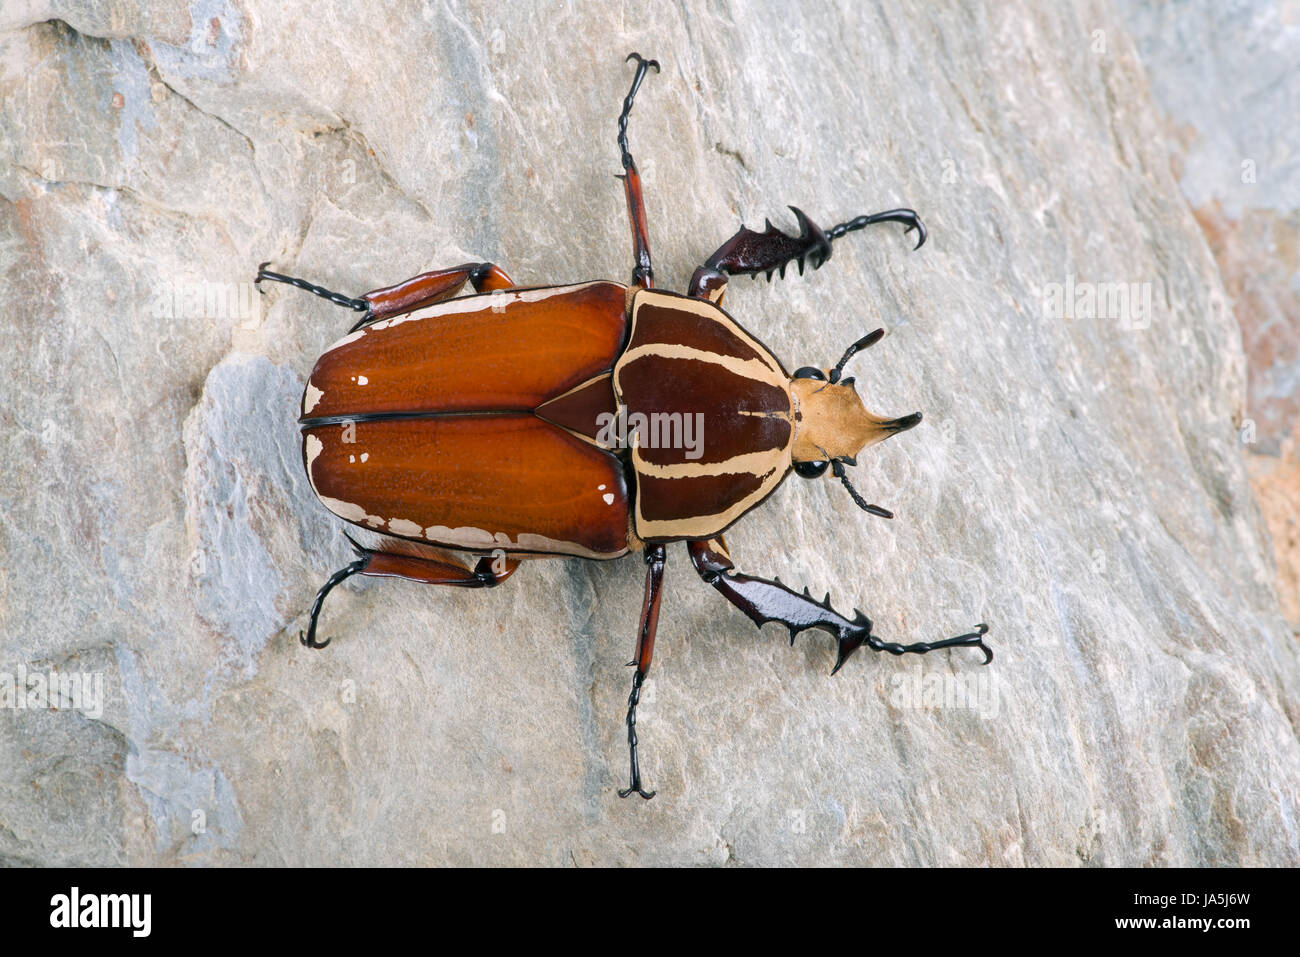 giant-flower-beetle-mecynorrhina-torquata-ugandensis-JA5J6W.jpg